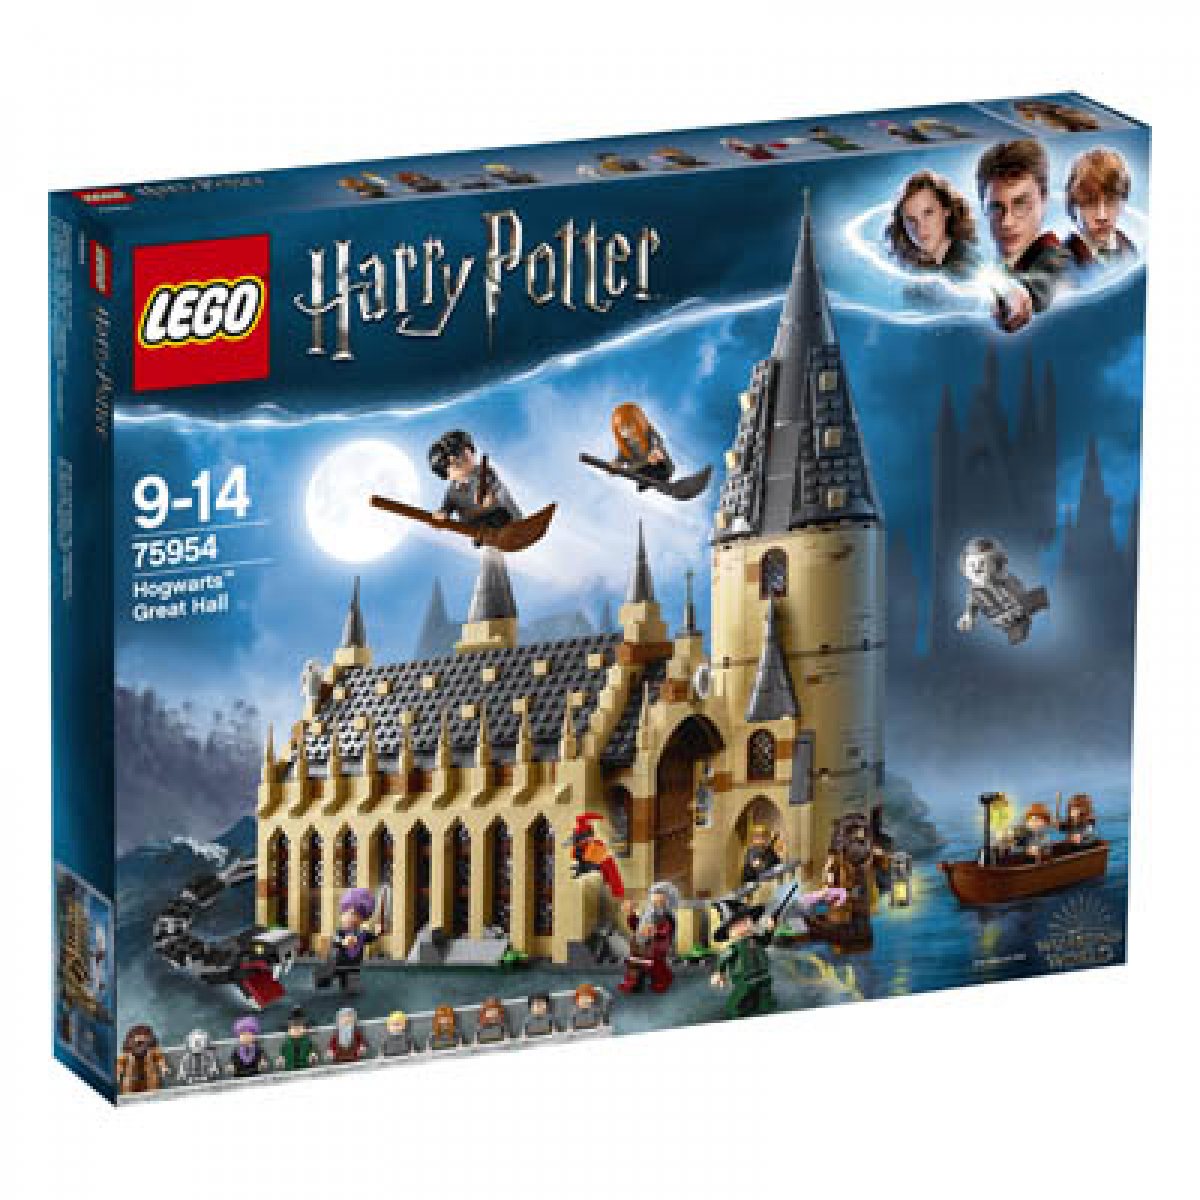 LEGO (R) Harry Potter - Hogwarts Great Hall